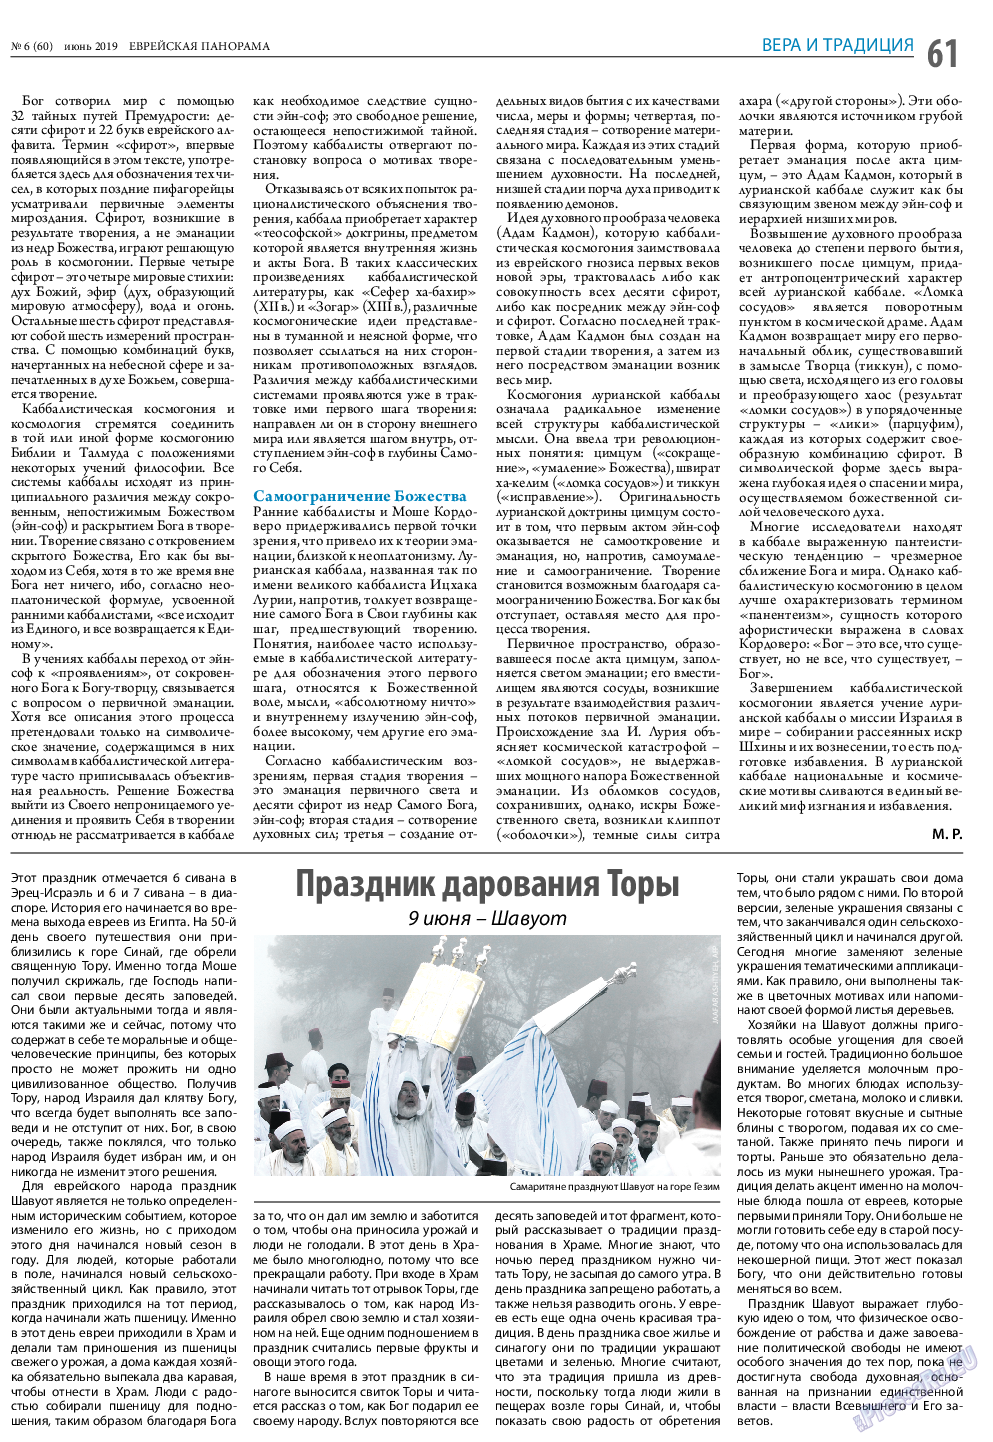 Еврейская панорама, газета. 2019 №6 стр.61